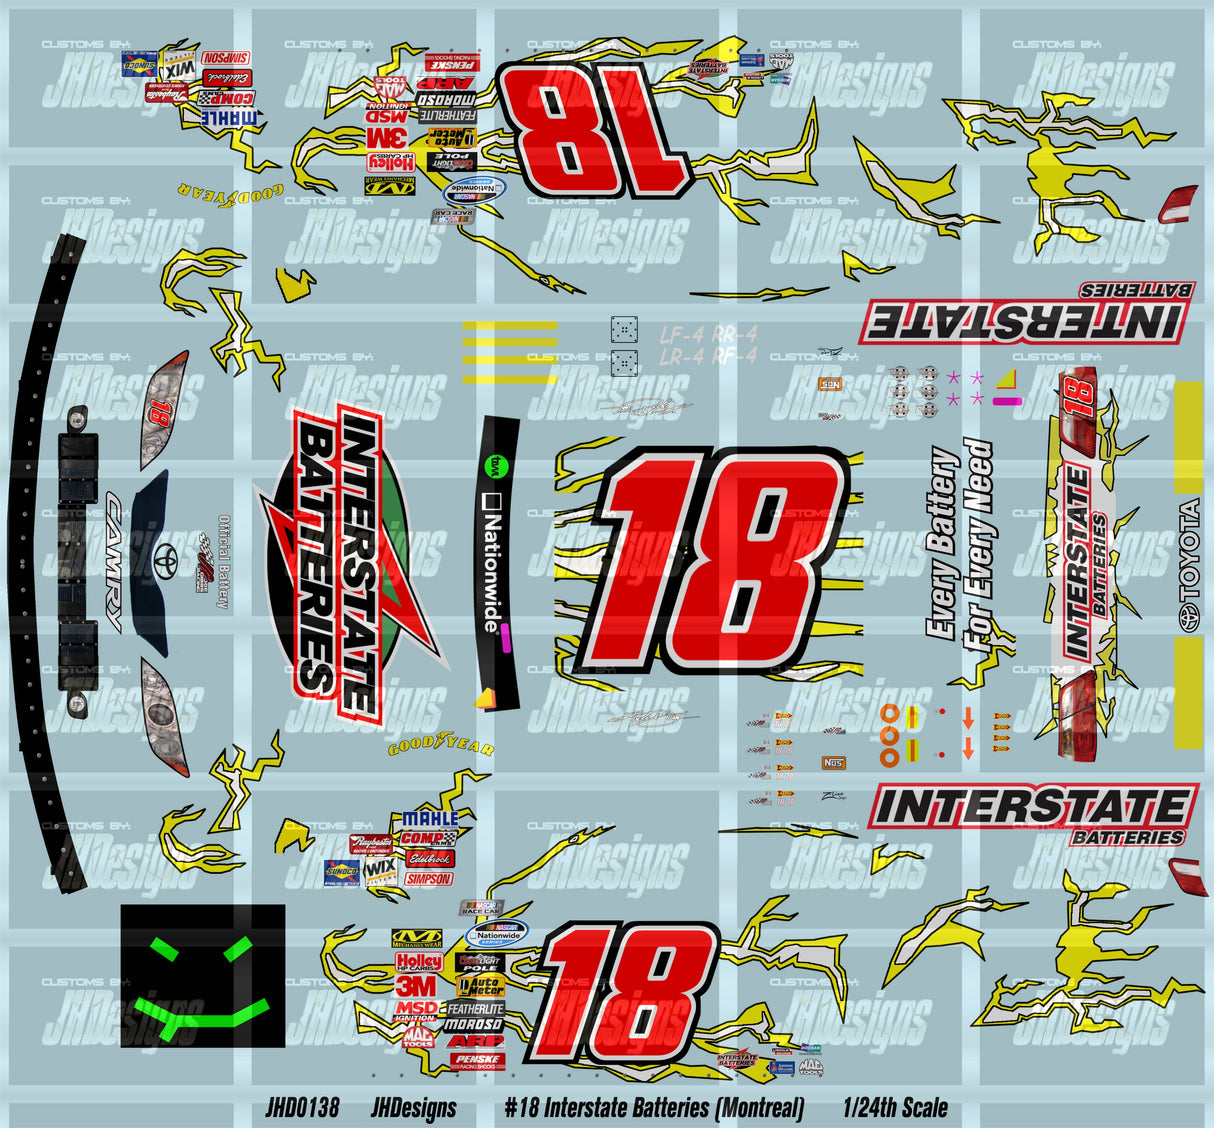 JH Designs Kyle Busch 2009 NWS #18 Interstate Batteries (Montreal) 1:24 Racecar Decal Set